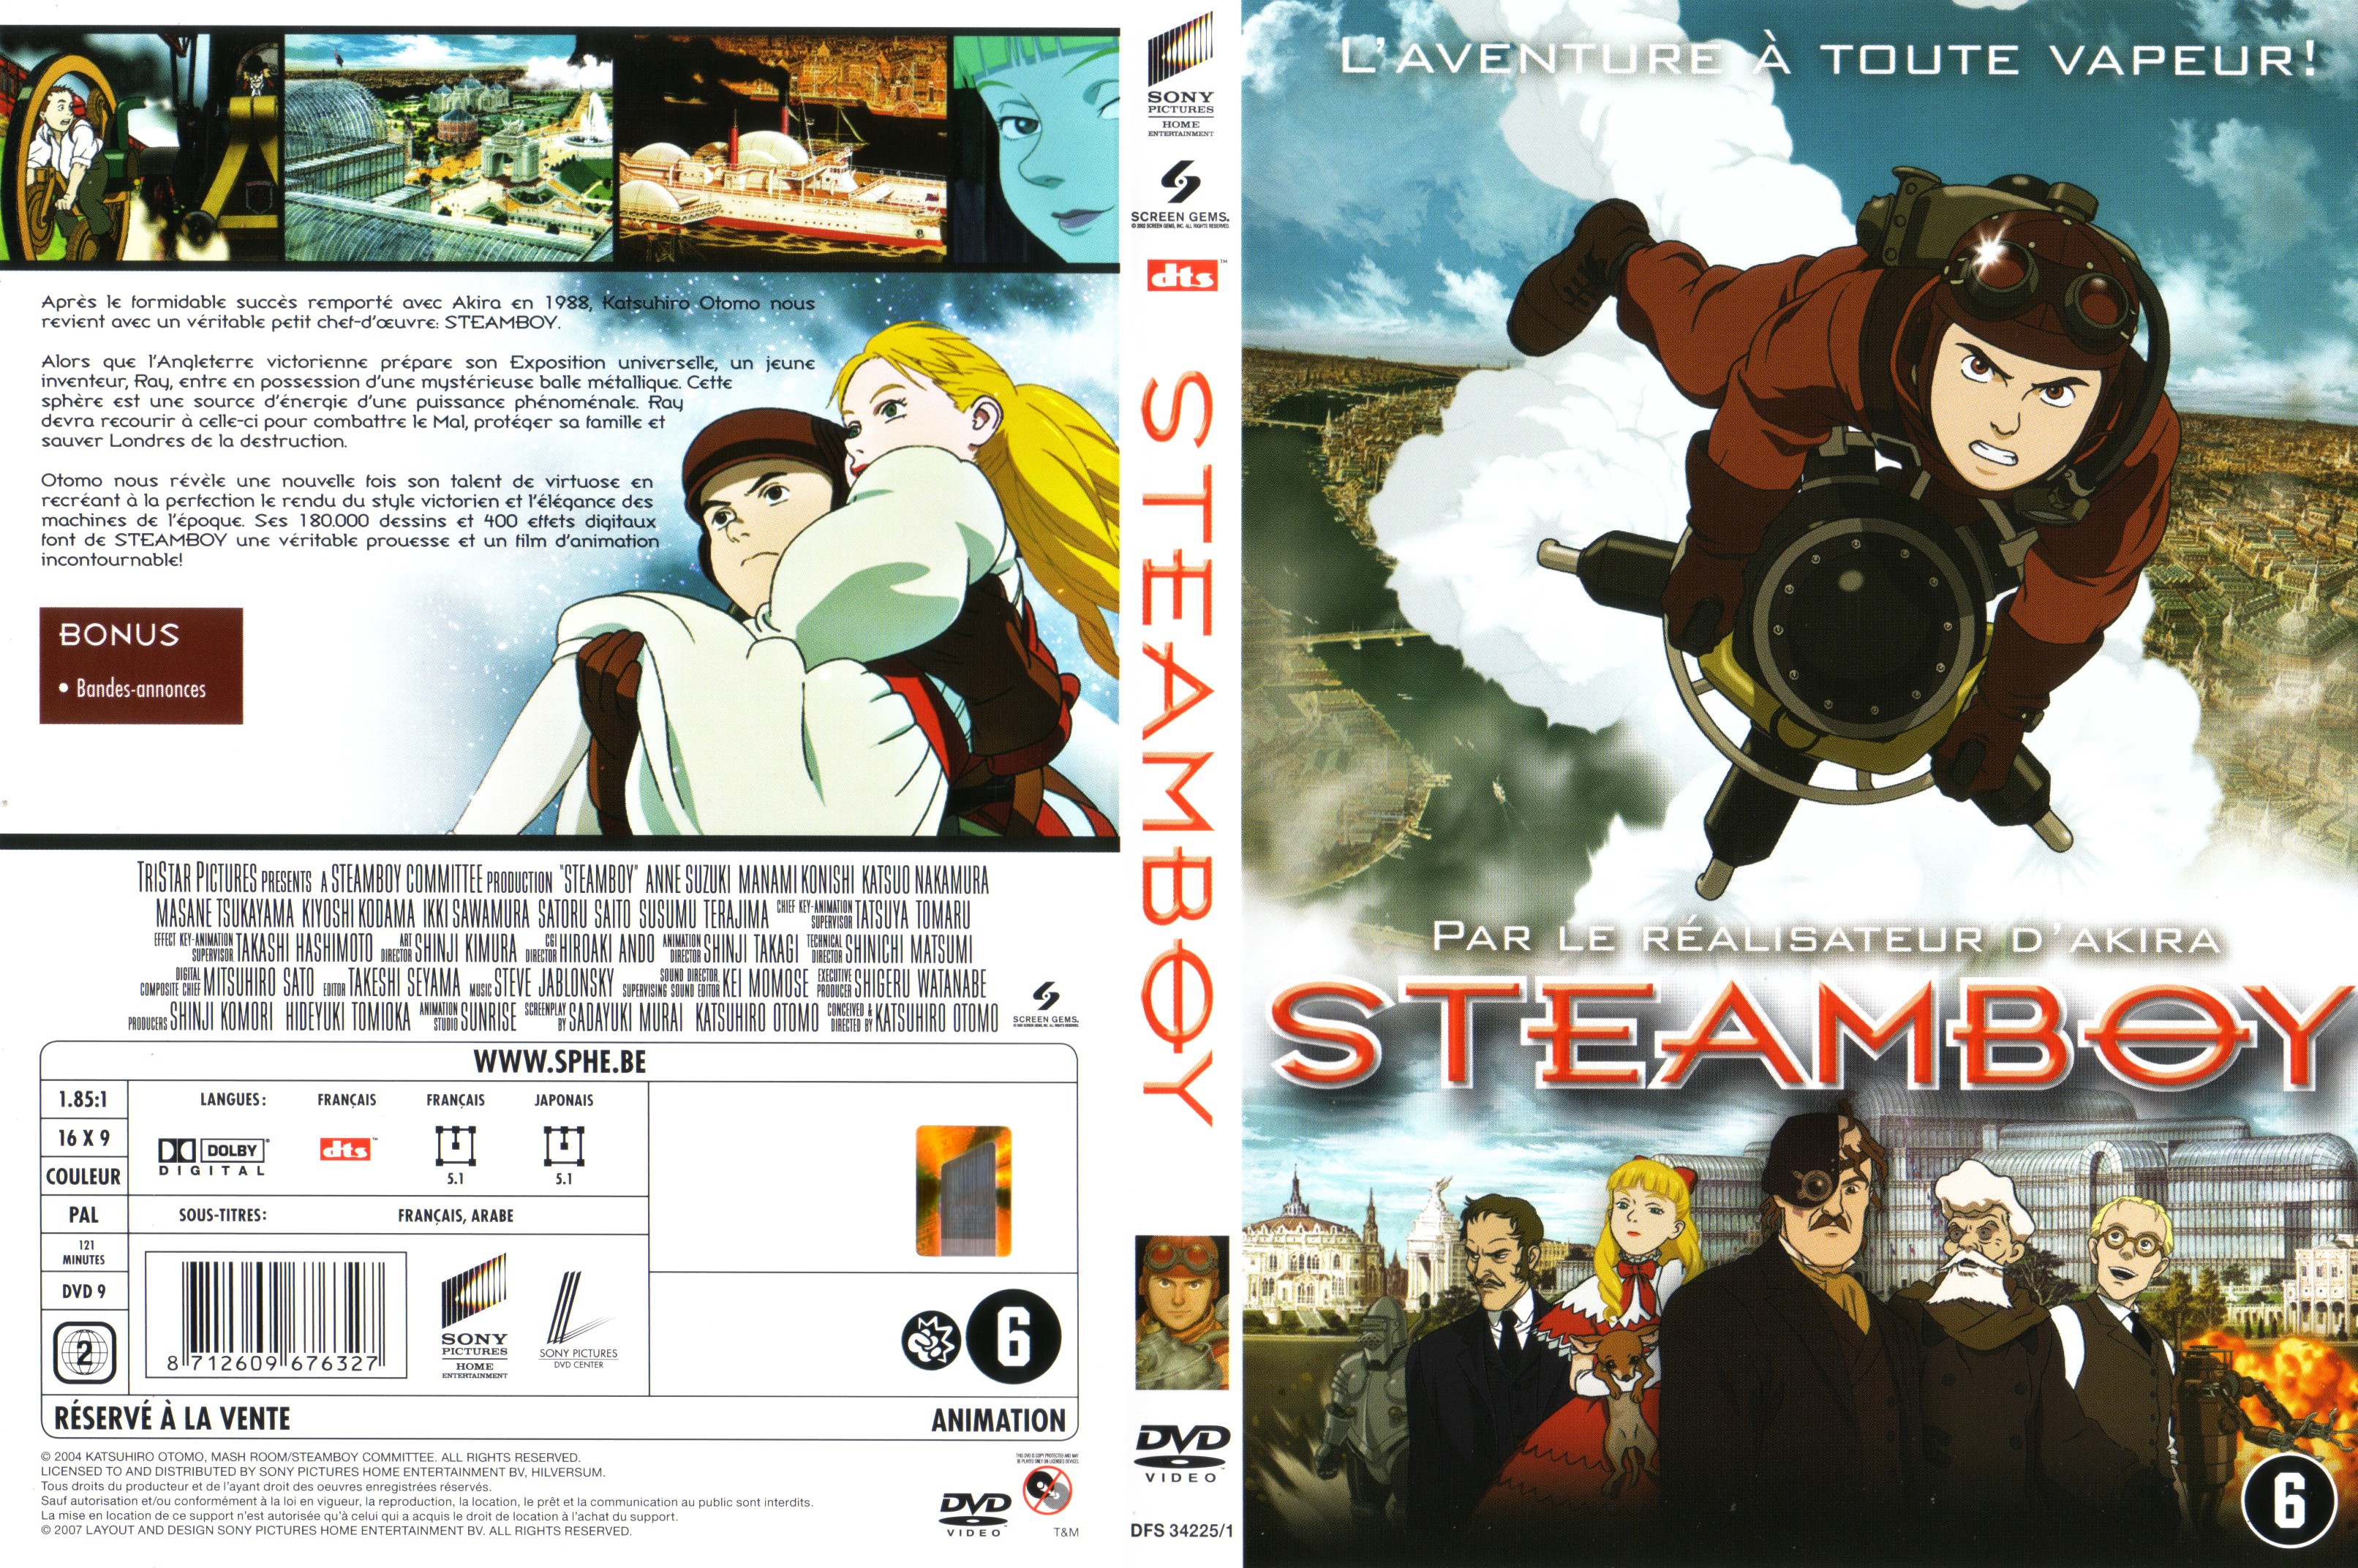 Jaquette DVD Steamboy v2